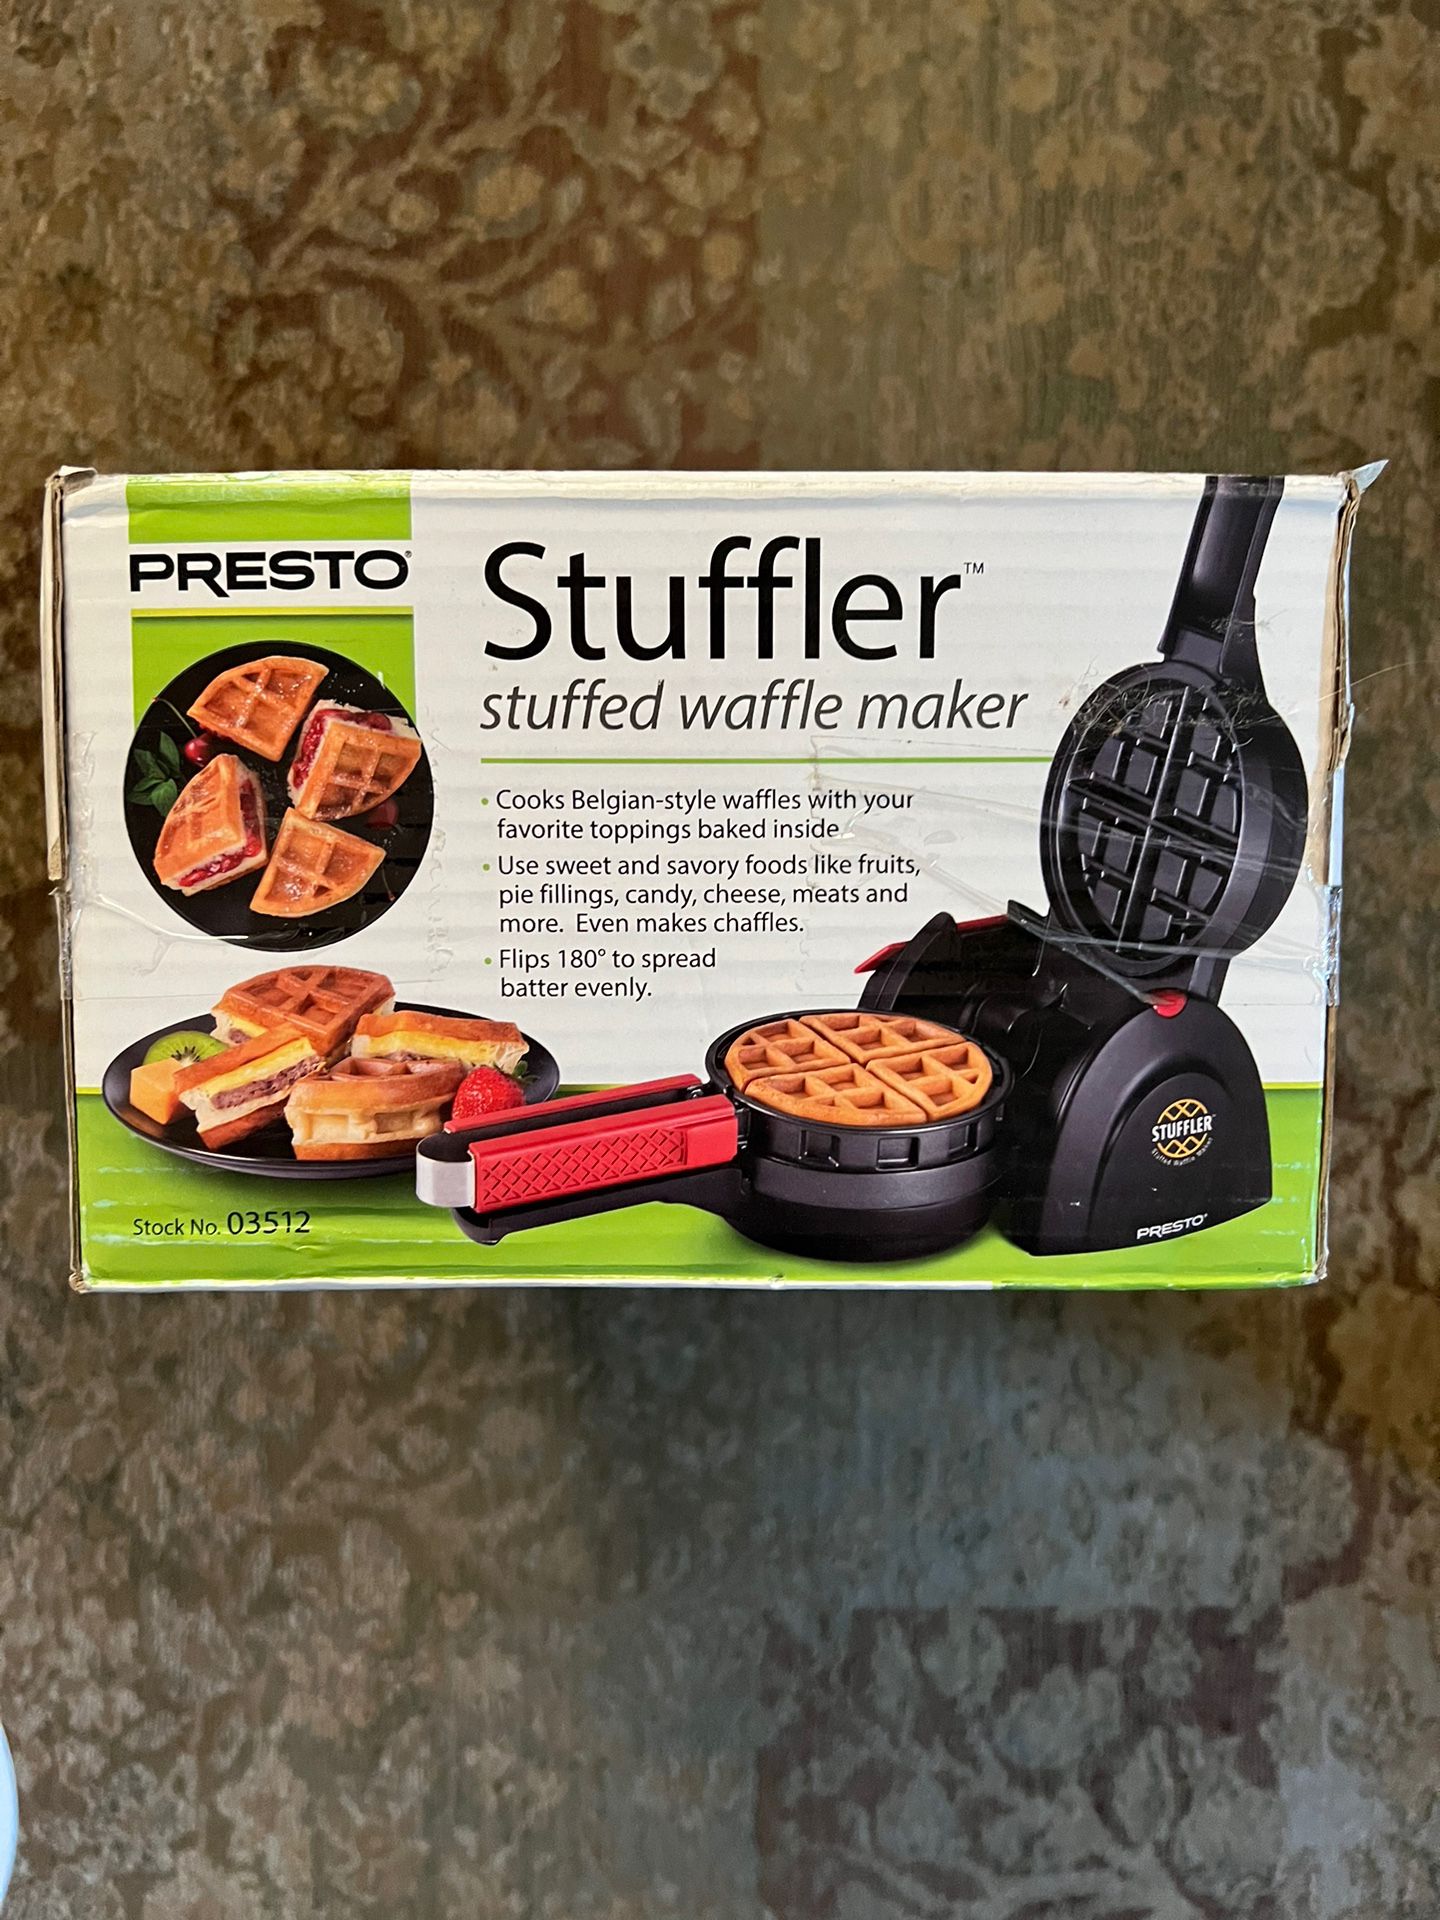 Presto Stuffler Stuffed Waffle Maker Review 